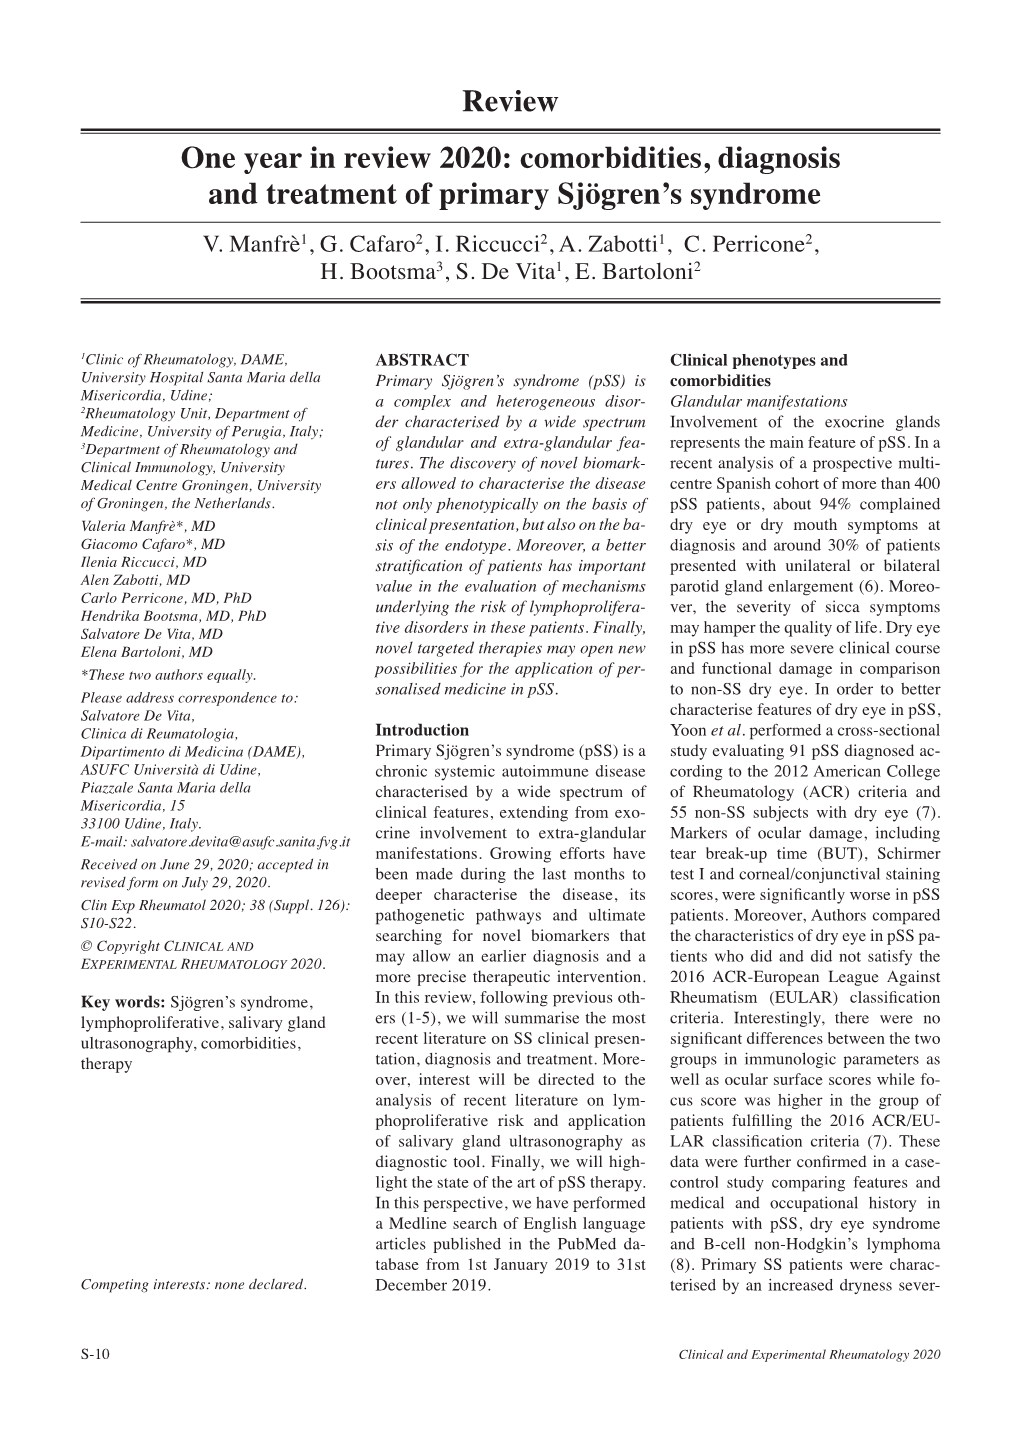 Comorbidities, Diagnosis and Treatment of Primary Sjögren's